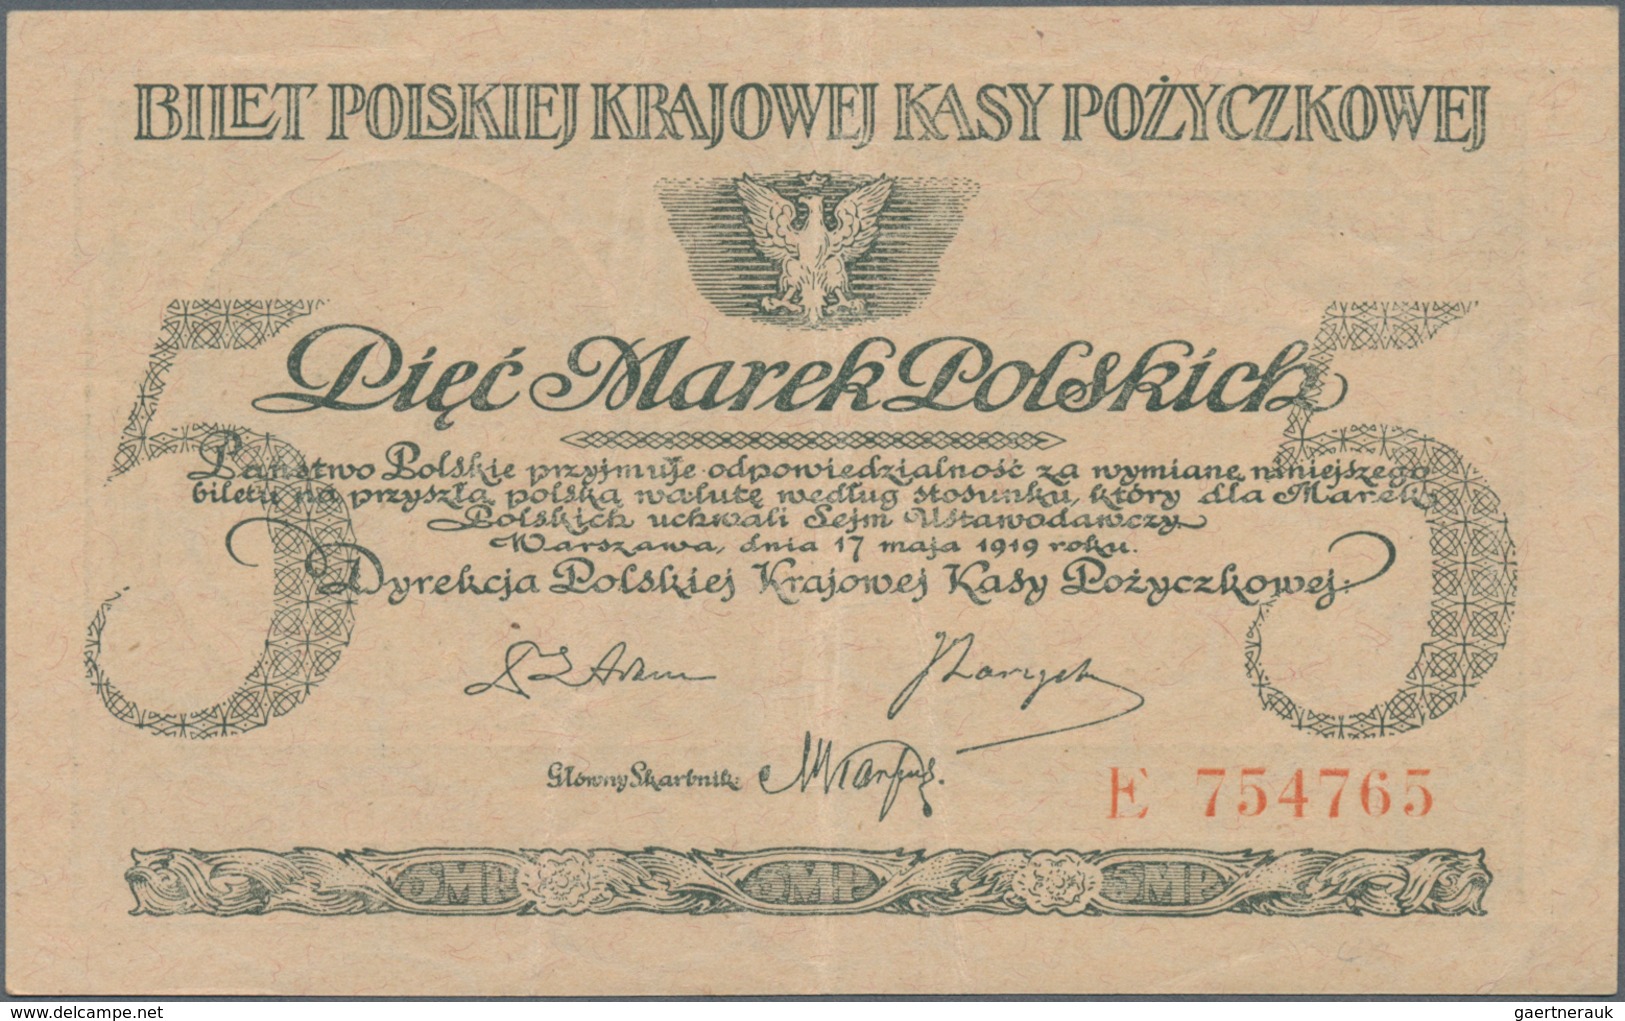 Poland / Polen: Set with 4 banknotes containing 1 Marka (VF+), 2x 5 Marka (VF) and 20 Marek (VF), P.